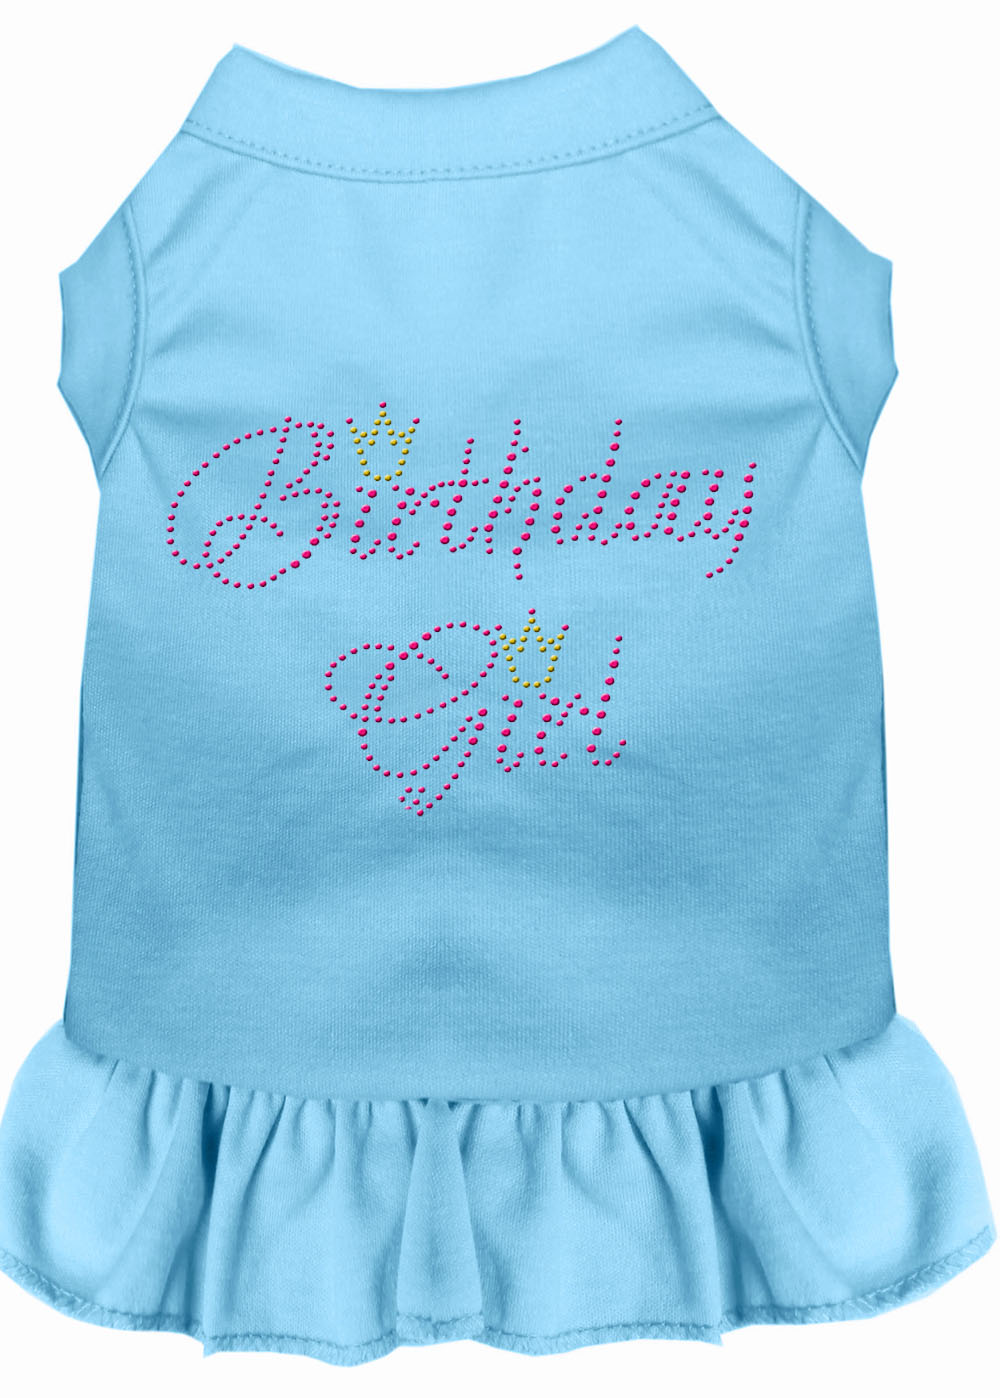 Birthday Girl Rhinestone Dress Baby Blue Med